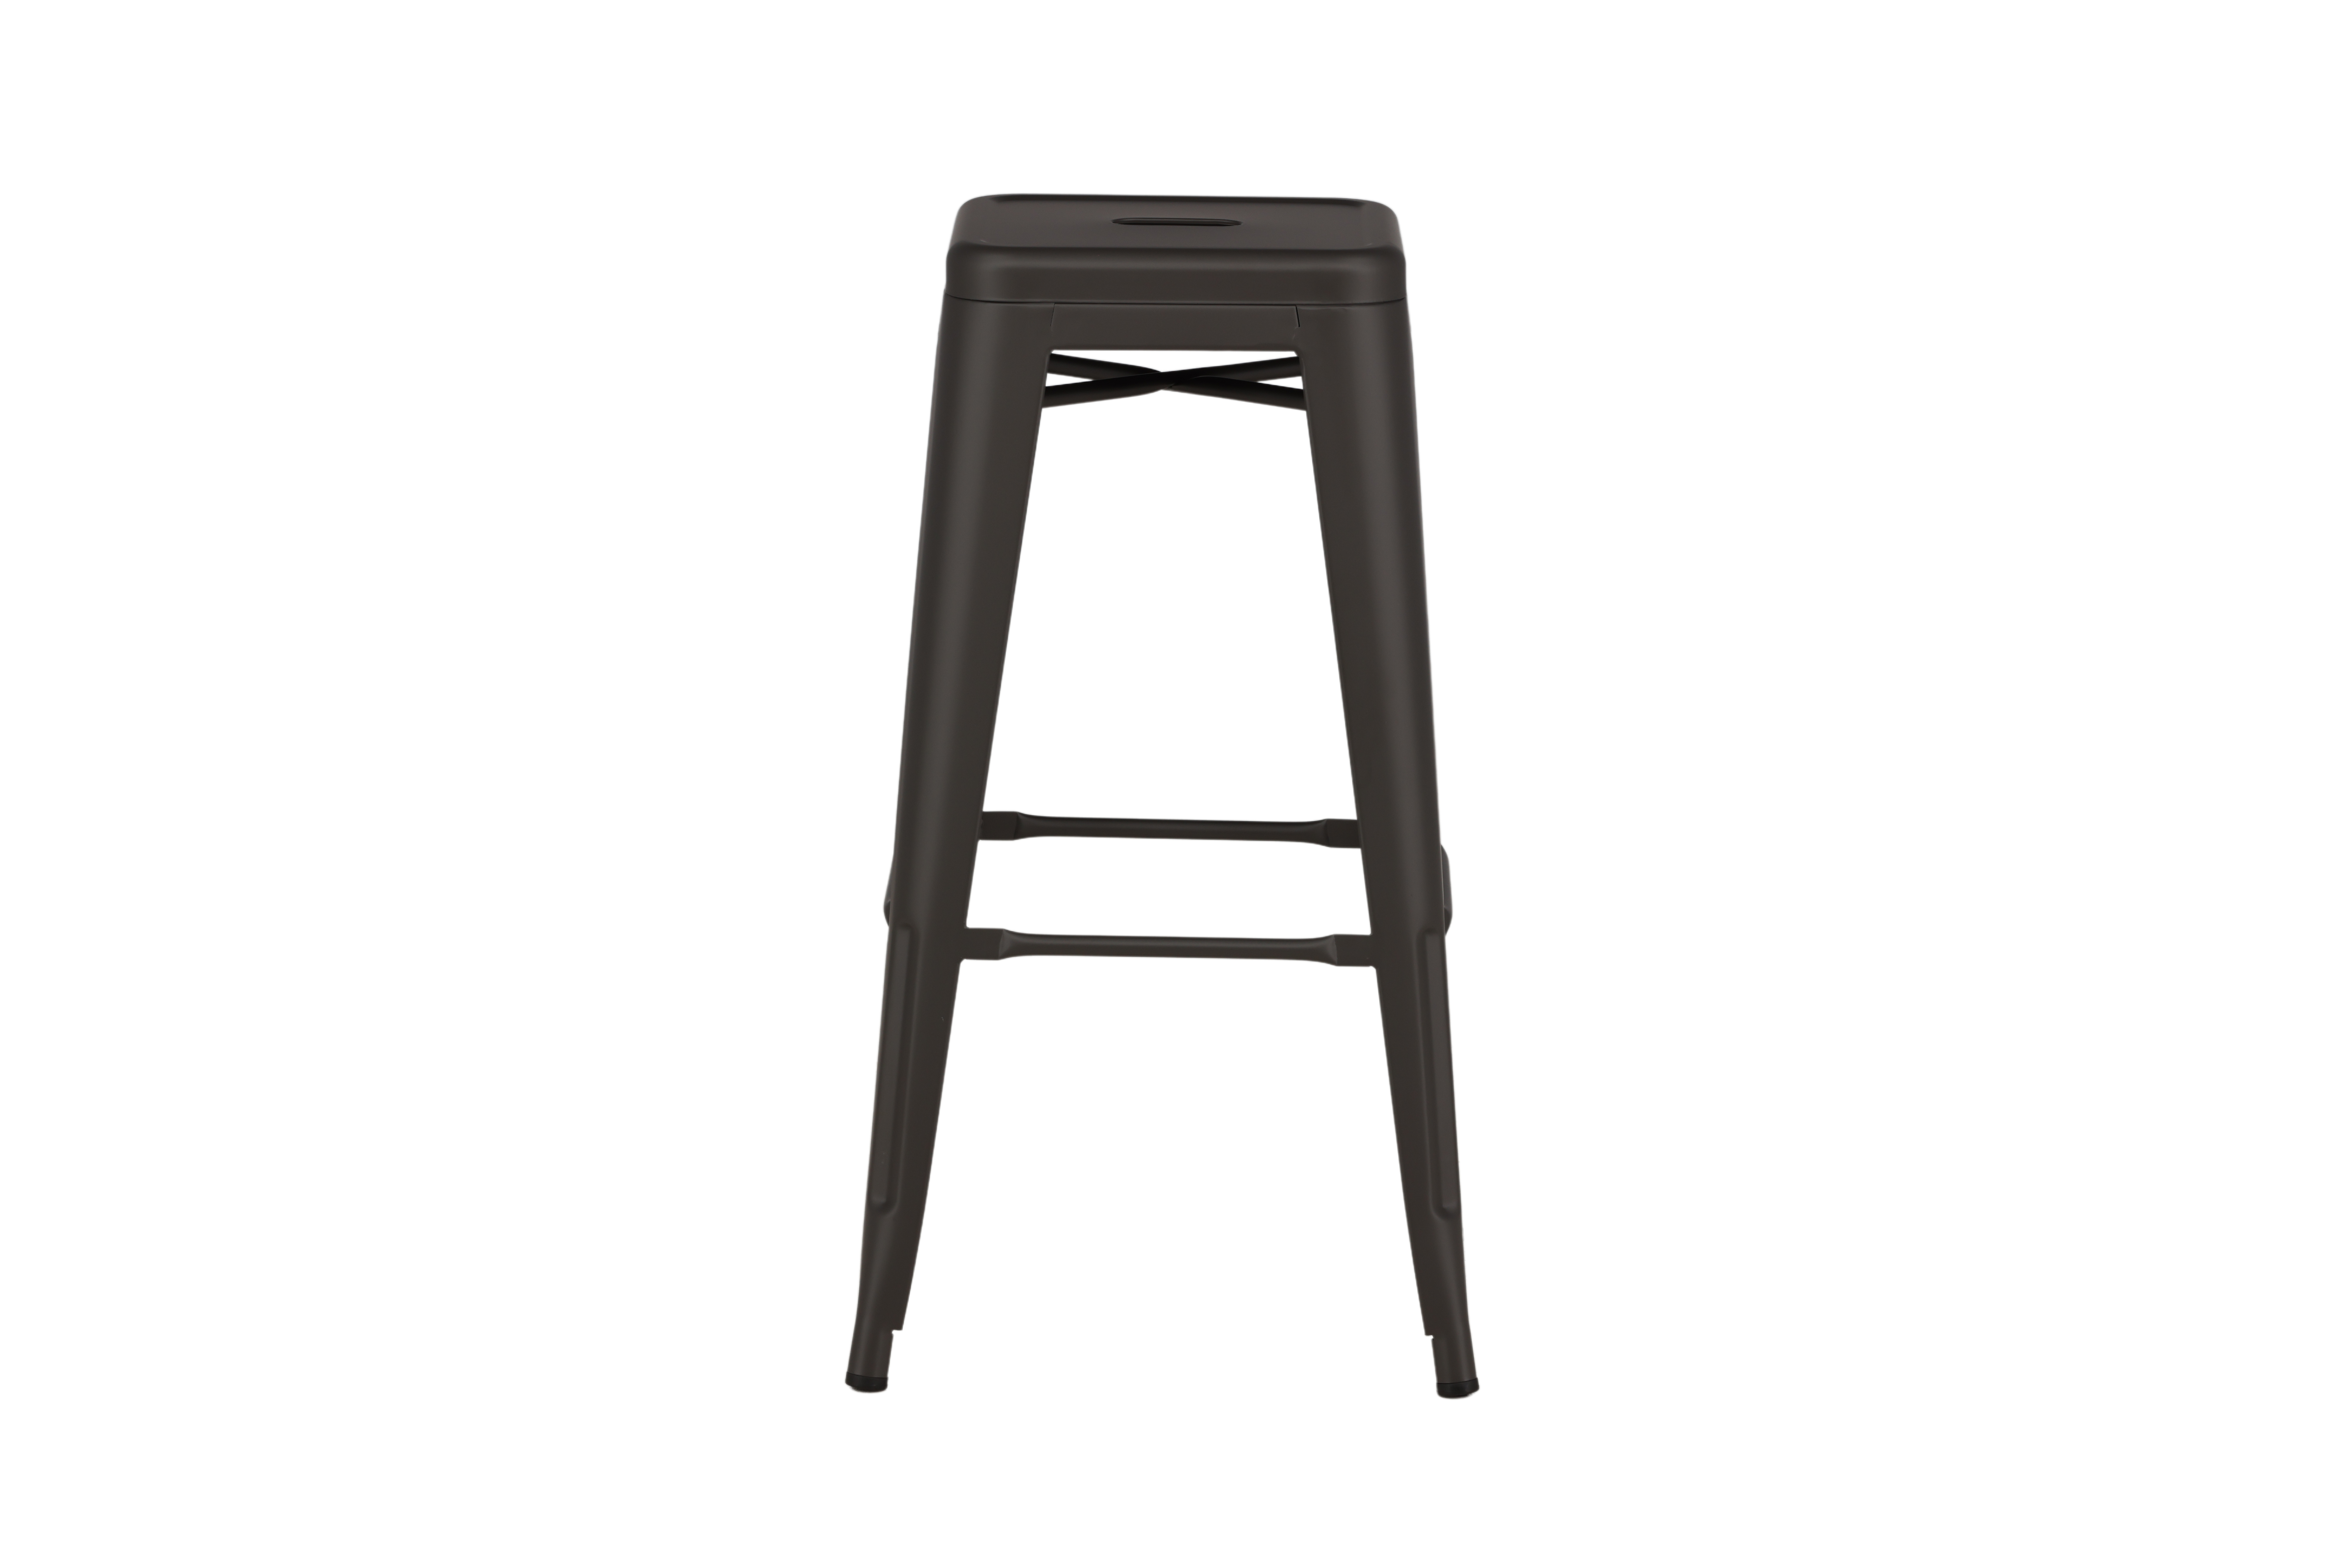 VENTURE DESIGN Tempe barstol, m. fodstøtte - mørkegrå stål